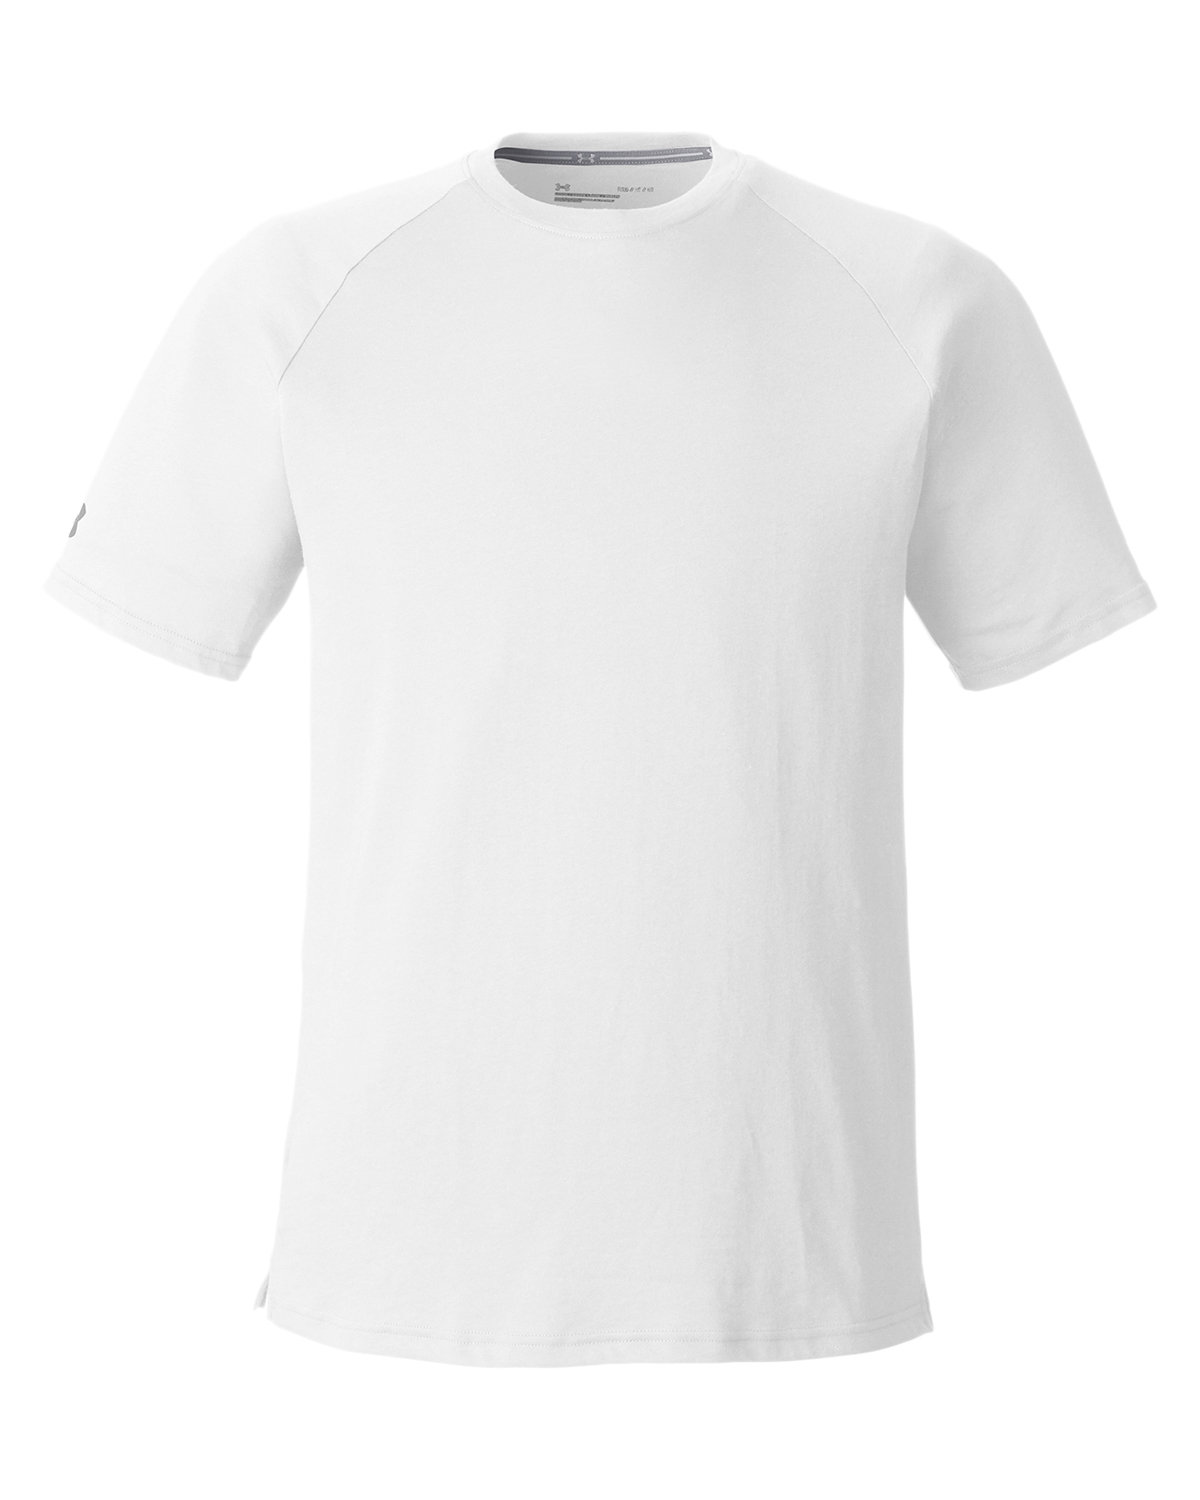 Under Armour 1360695 - Unisex Athletics T-Shirt